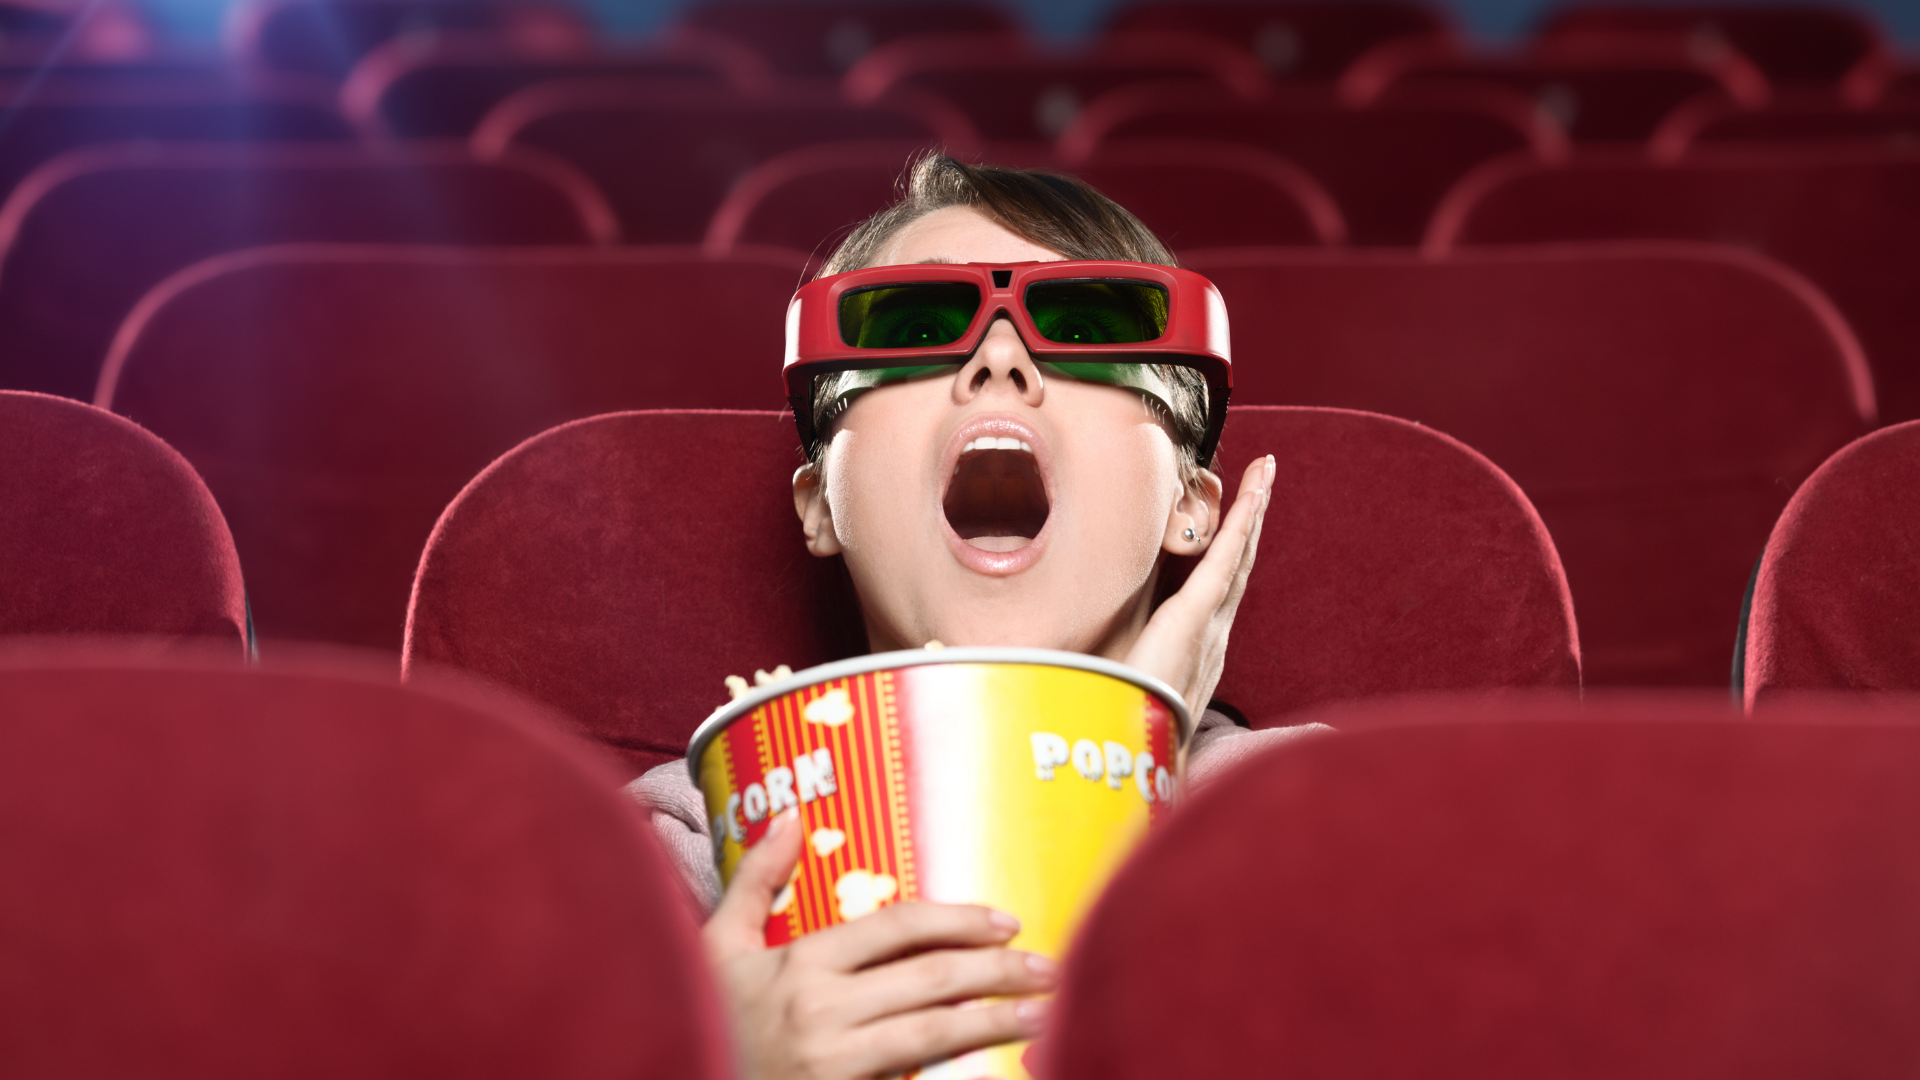 We can go to the cinema. Зрители в кинотеатре. Кинозал с людьми. Зрители в кинозале. Дети в кинотеатре с попкорном.